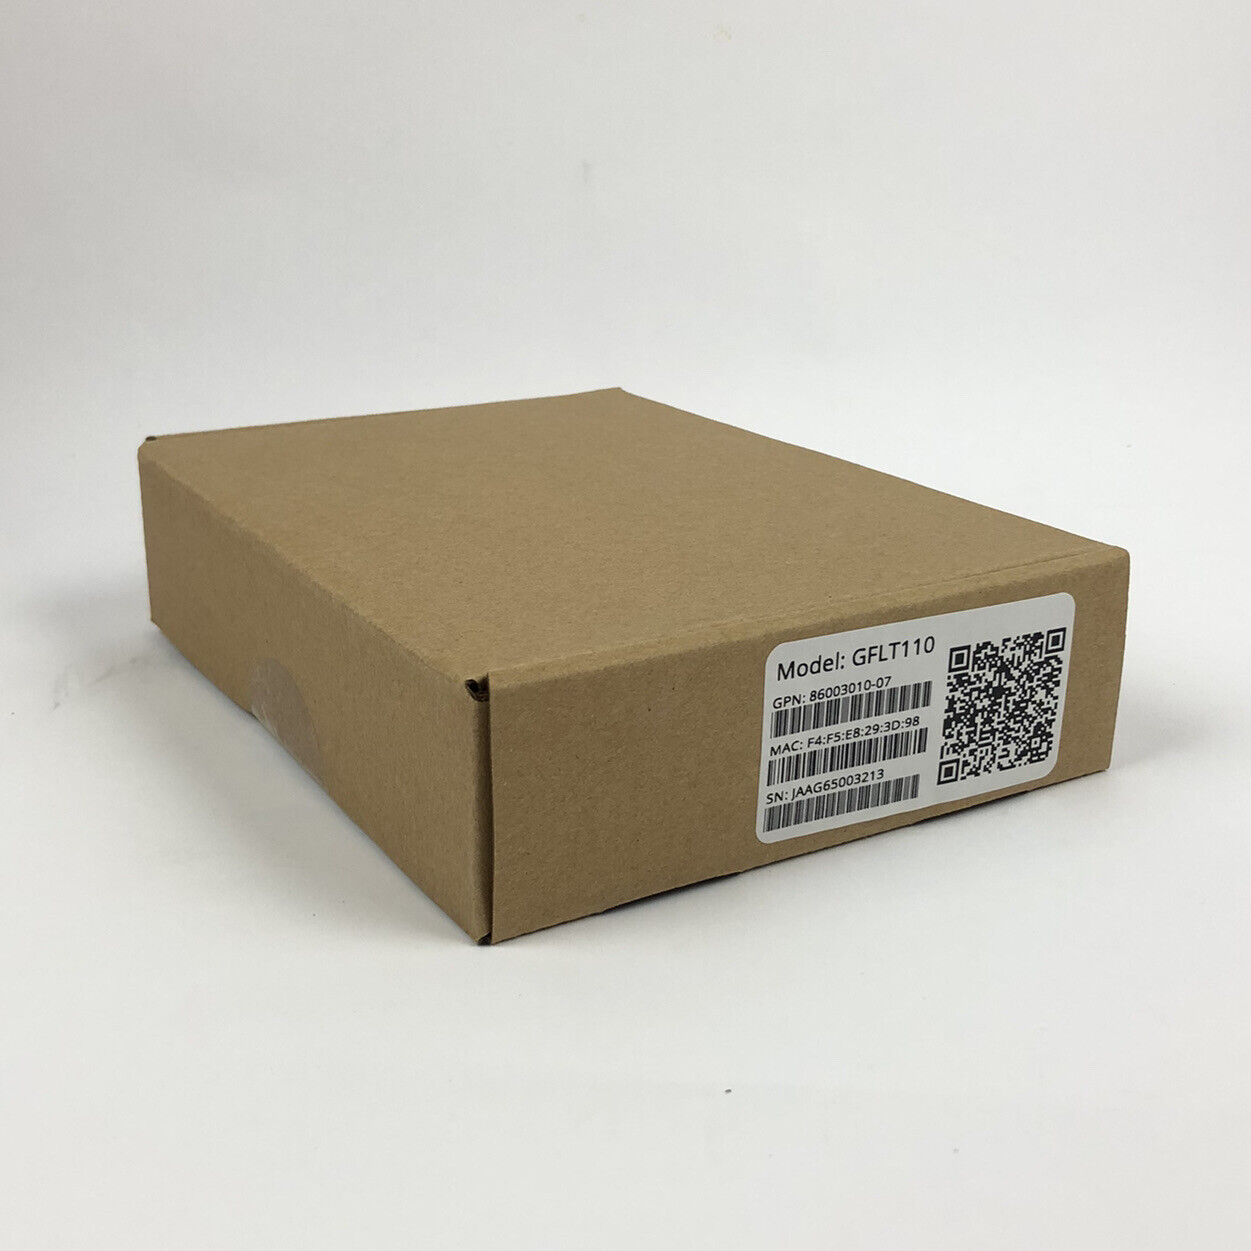 2 Google Fiber Jacks & Base GFLT110 NEW IN BOX SEALED From Manufacturer Google Fiber 86003010-07 - фотография #4